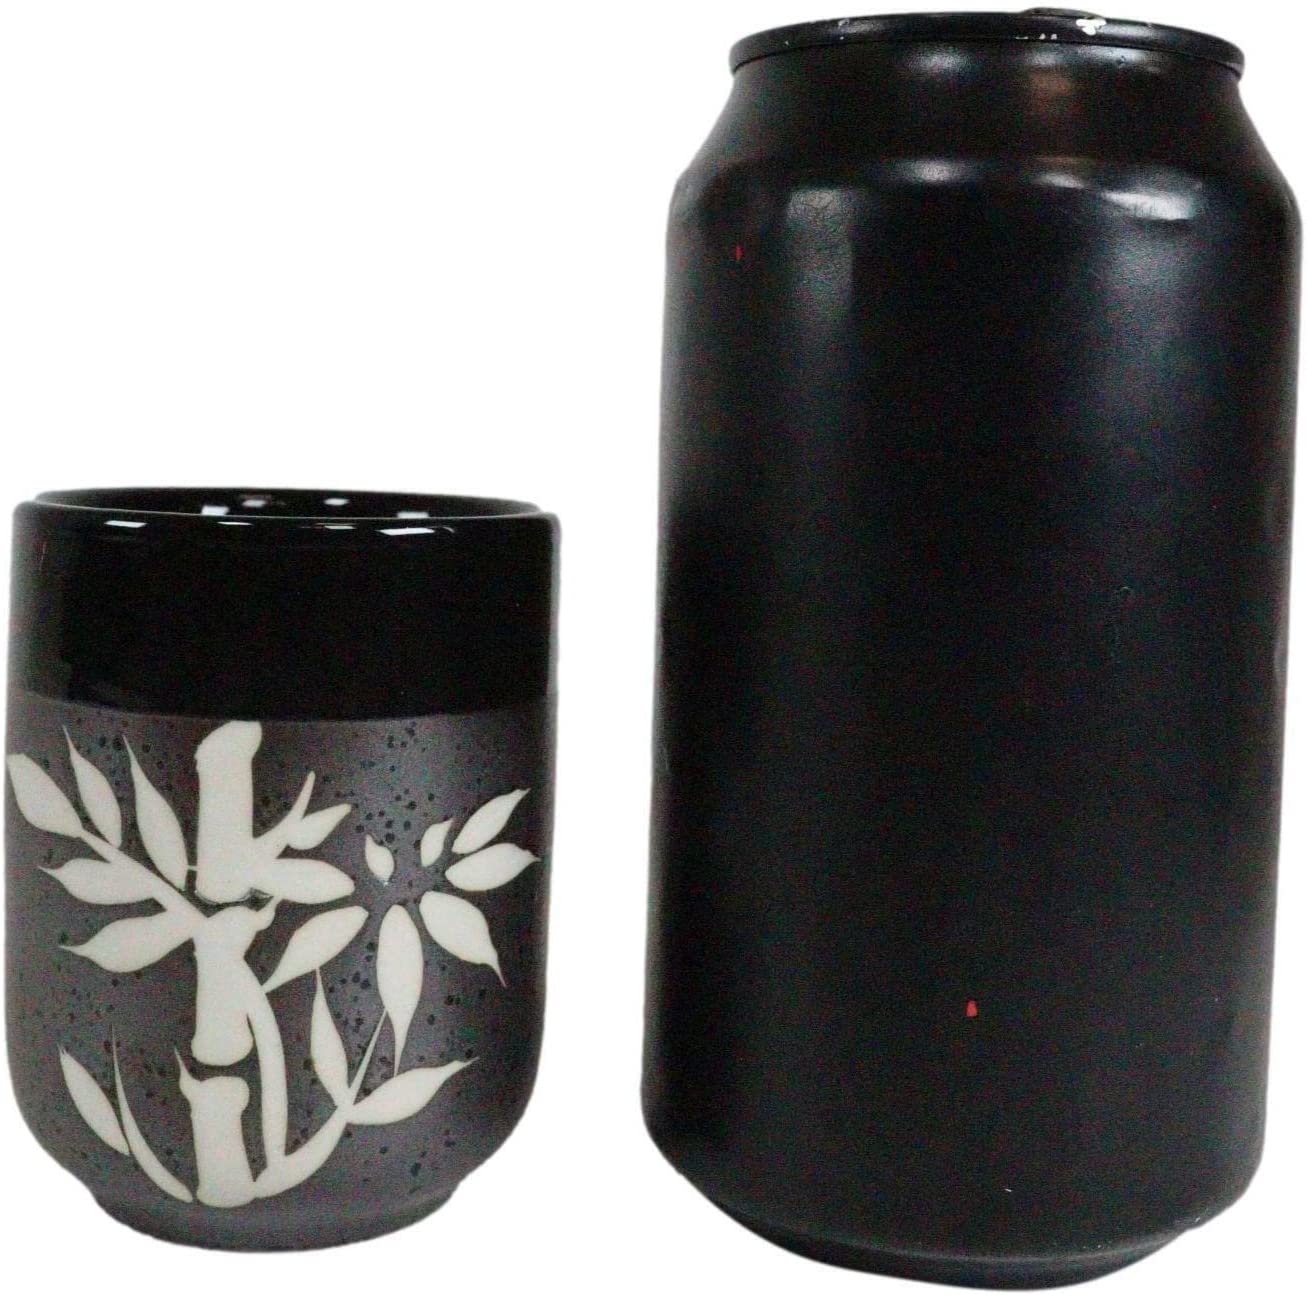 Charcoal Bamboo Motif Japanese Tea Set